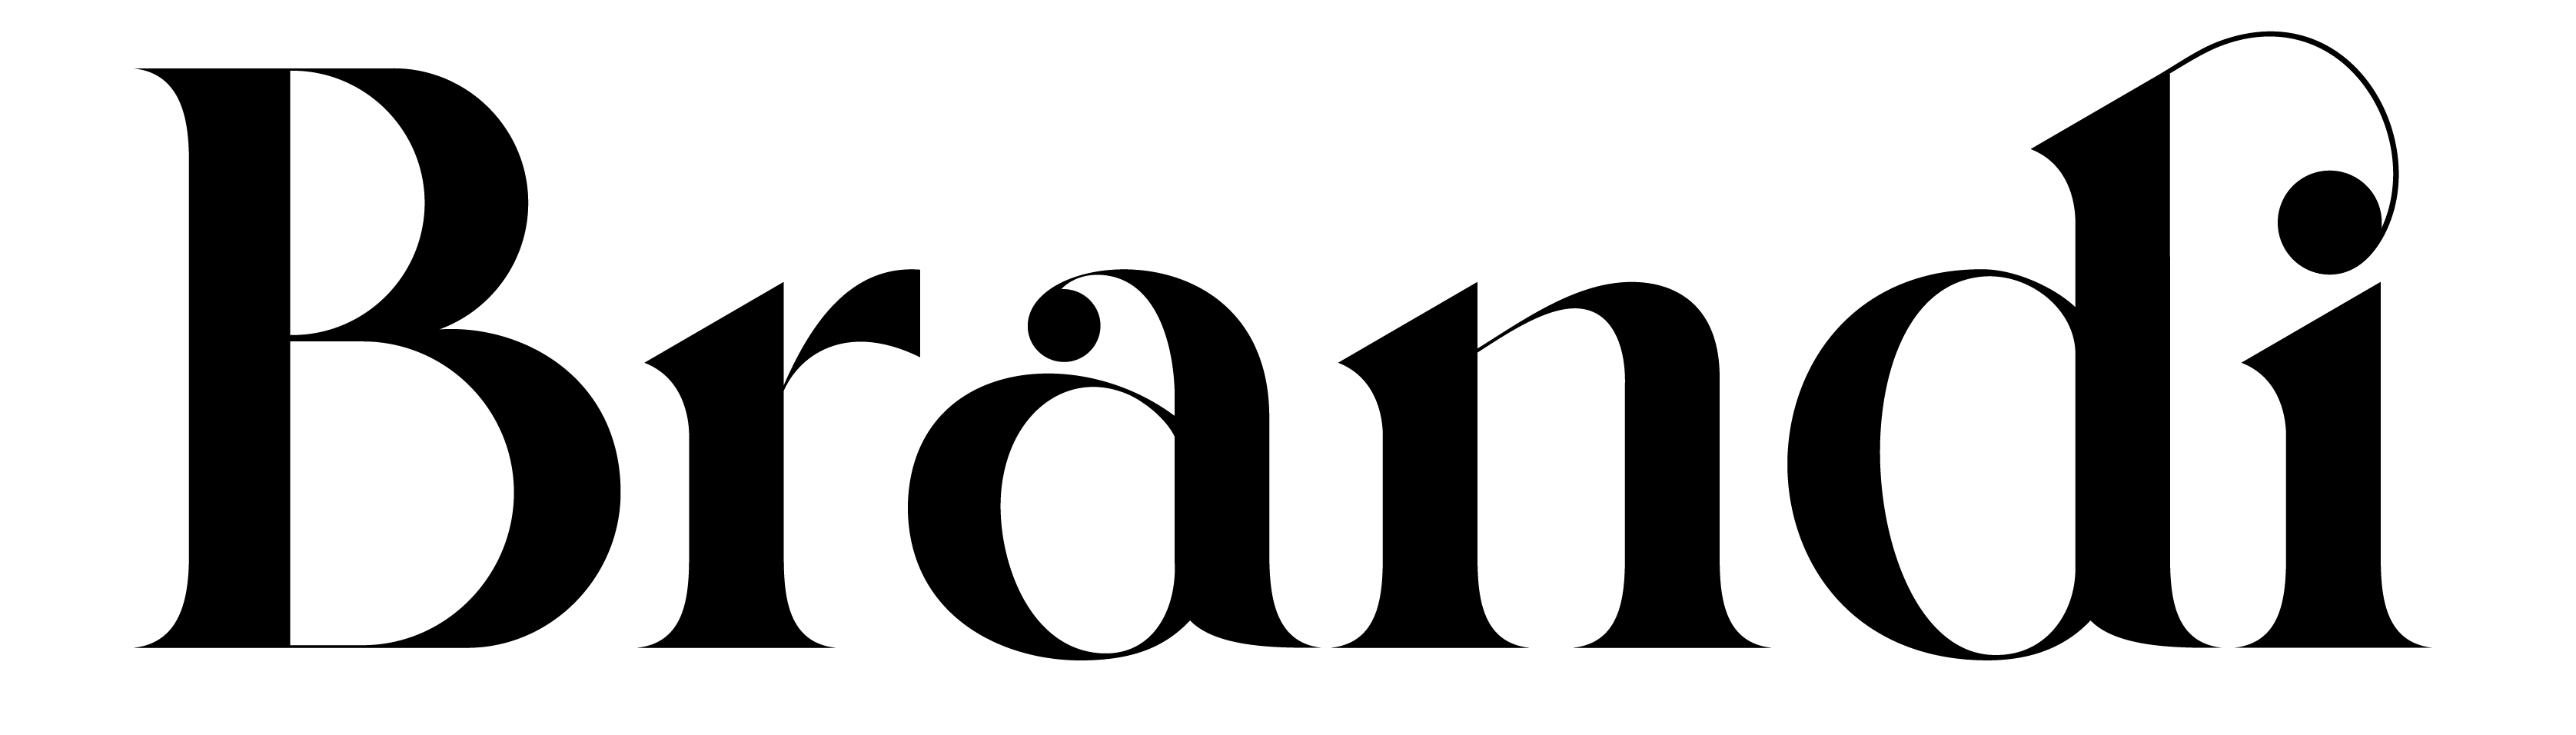 logo-negro-brandi-diseño